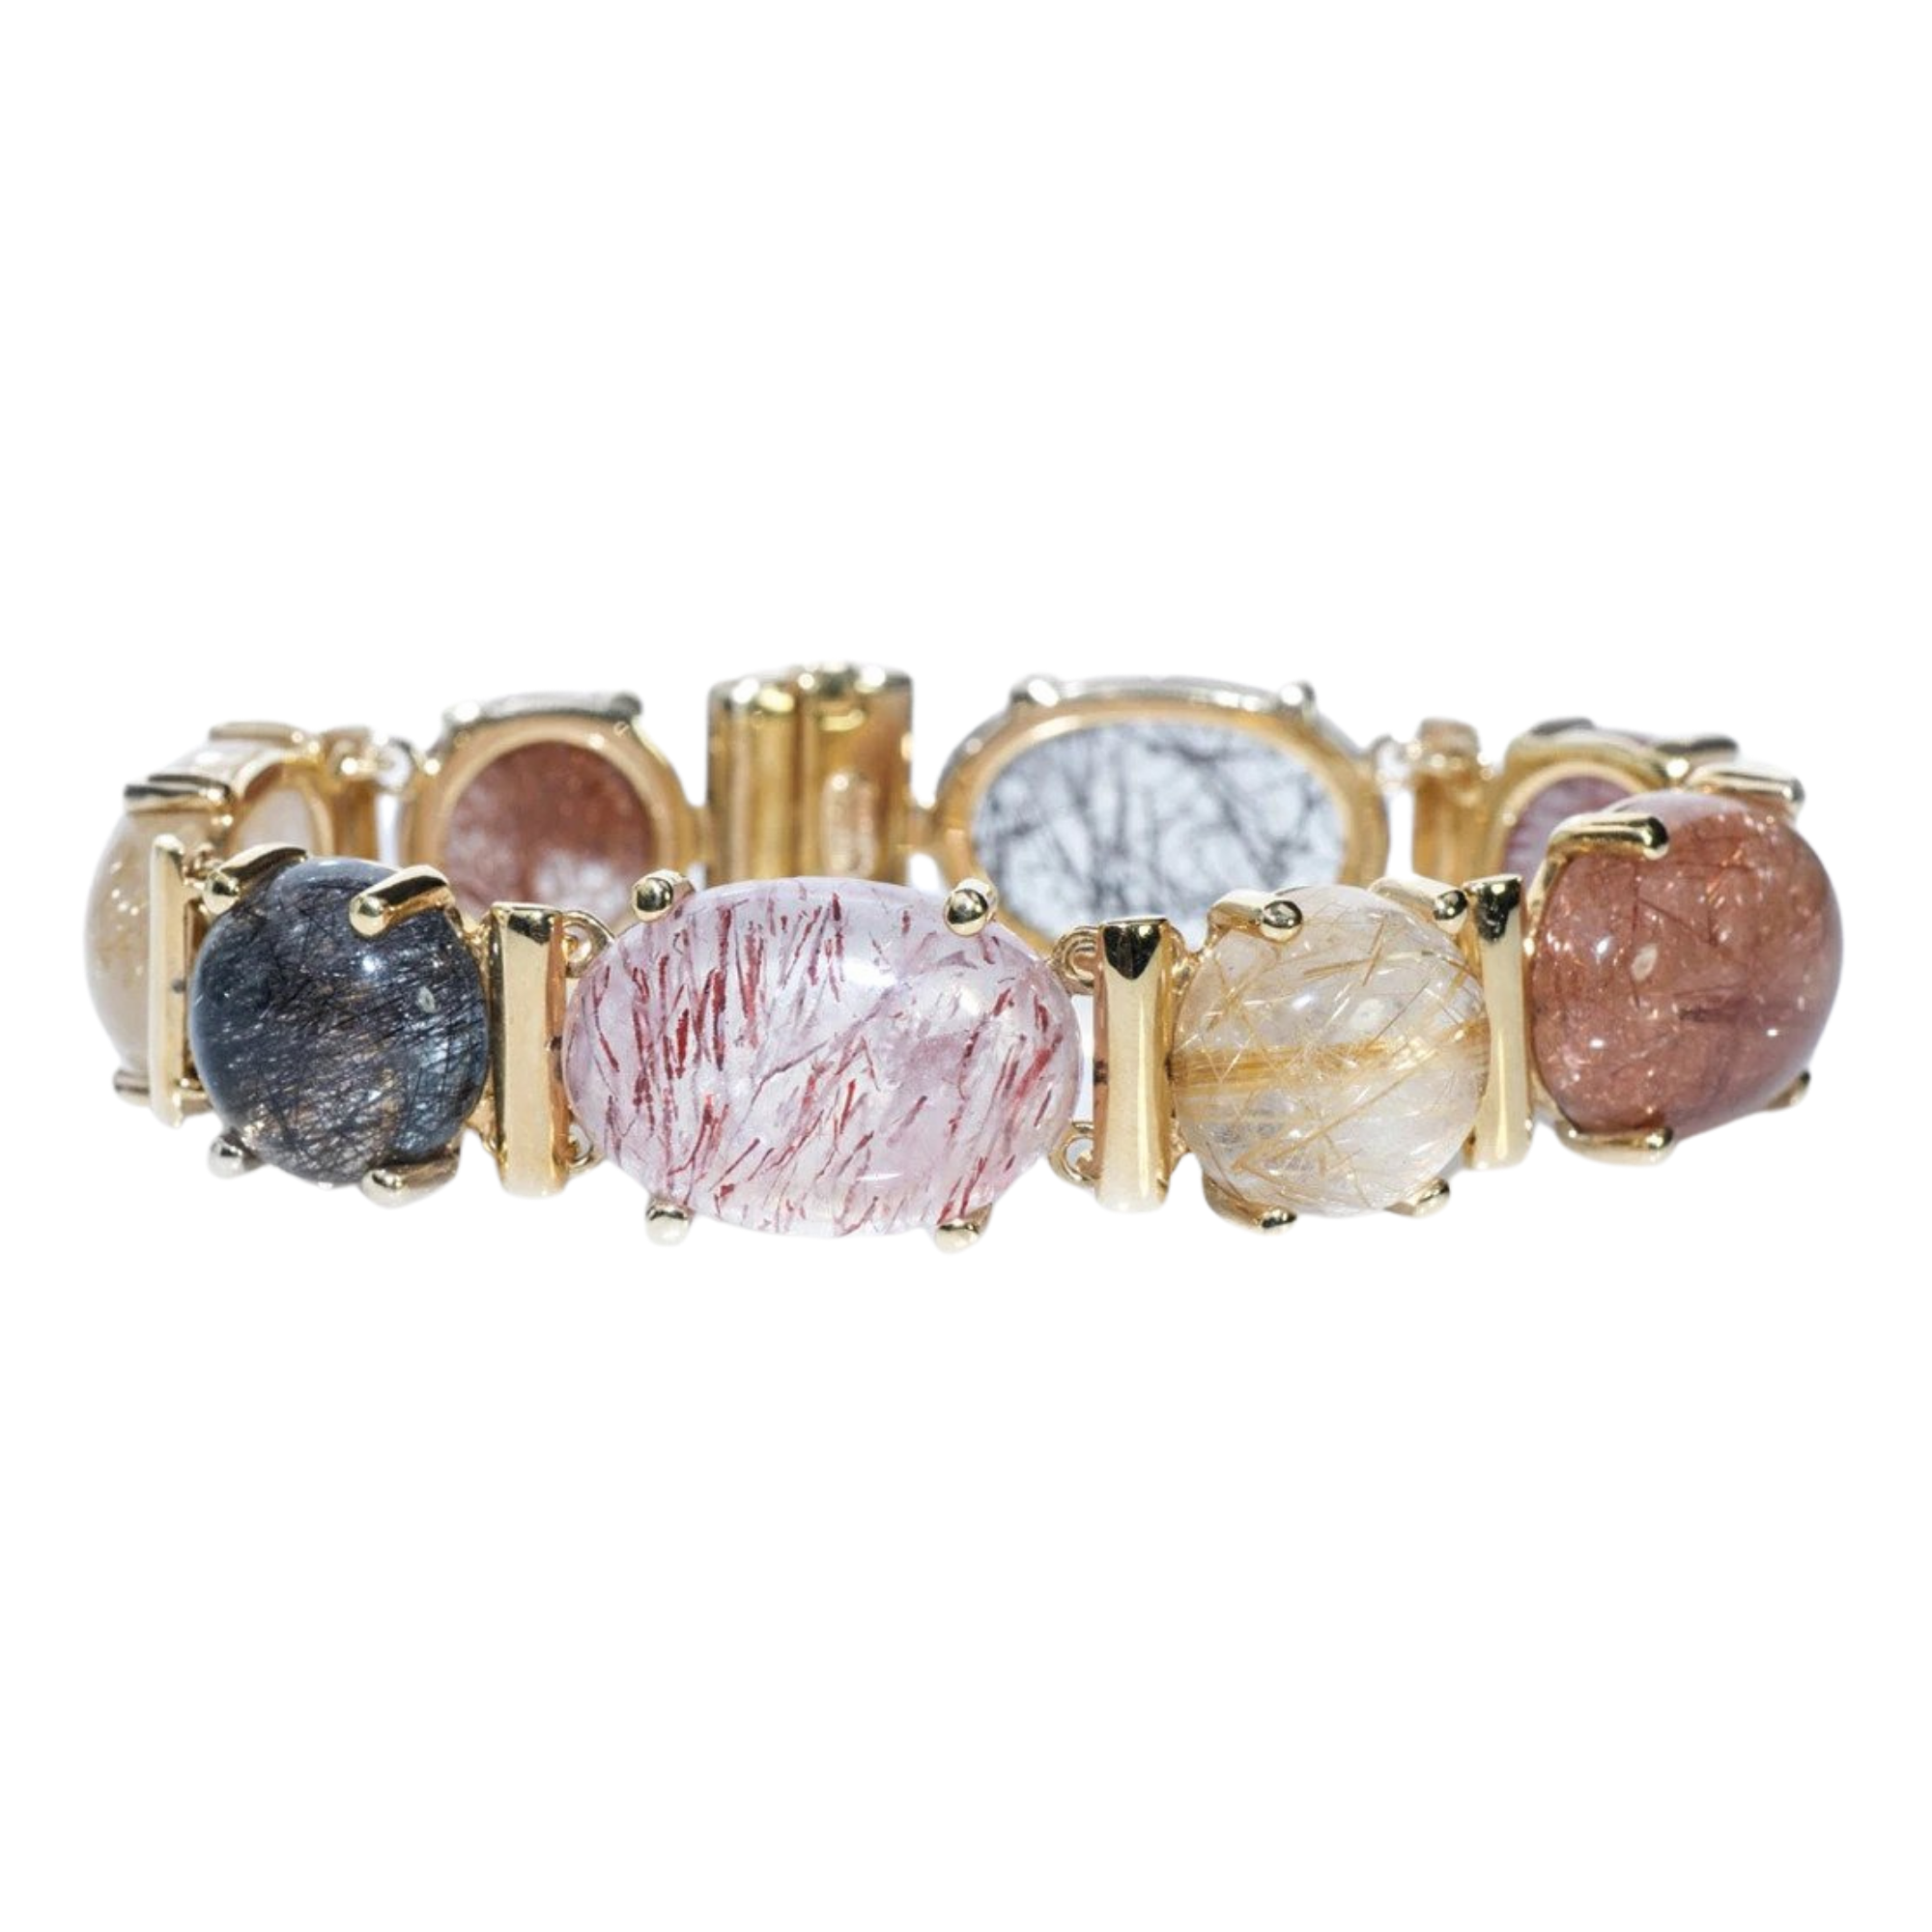 Marco Molinari Multicolor Rutilated Quartz Bracelet, $7,880